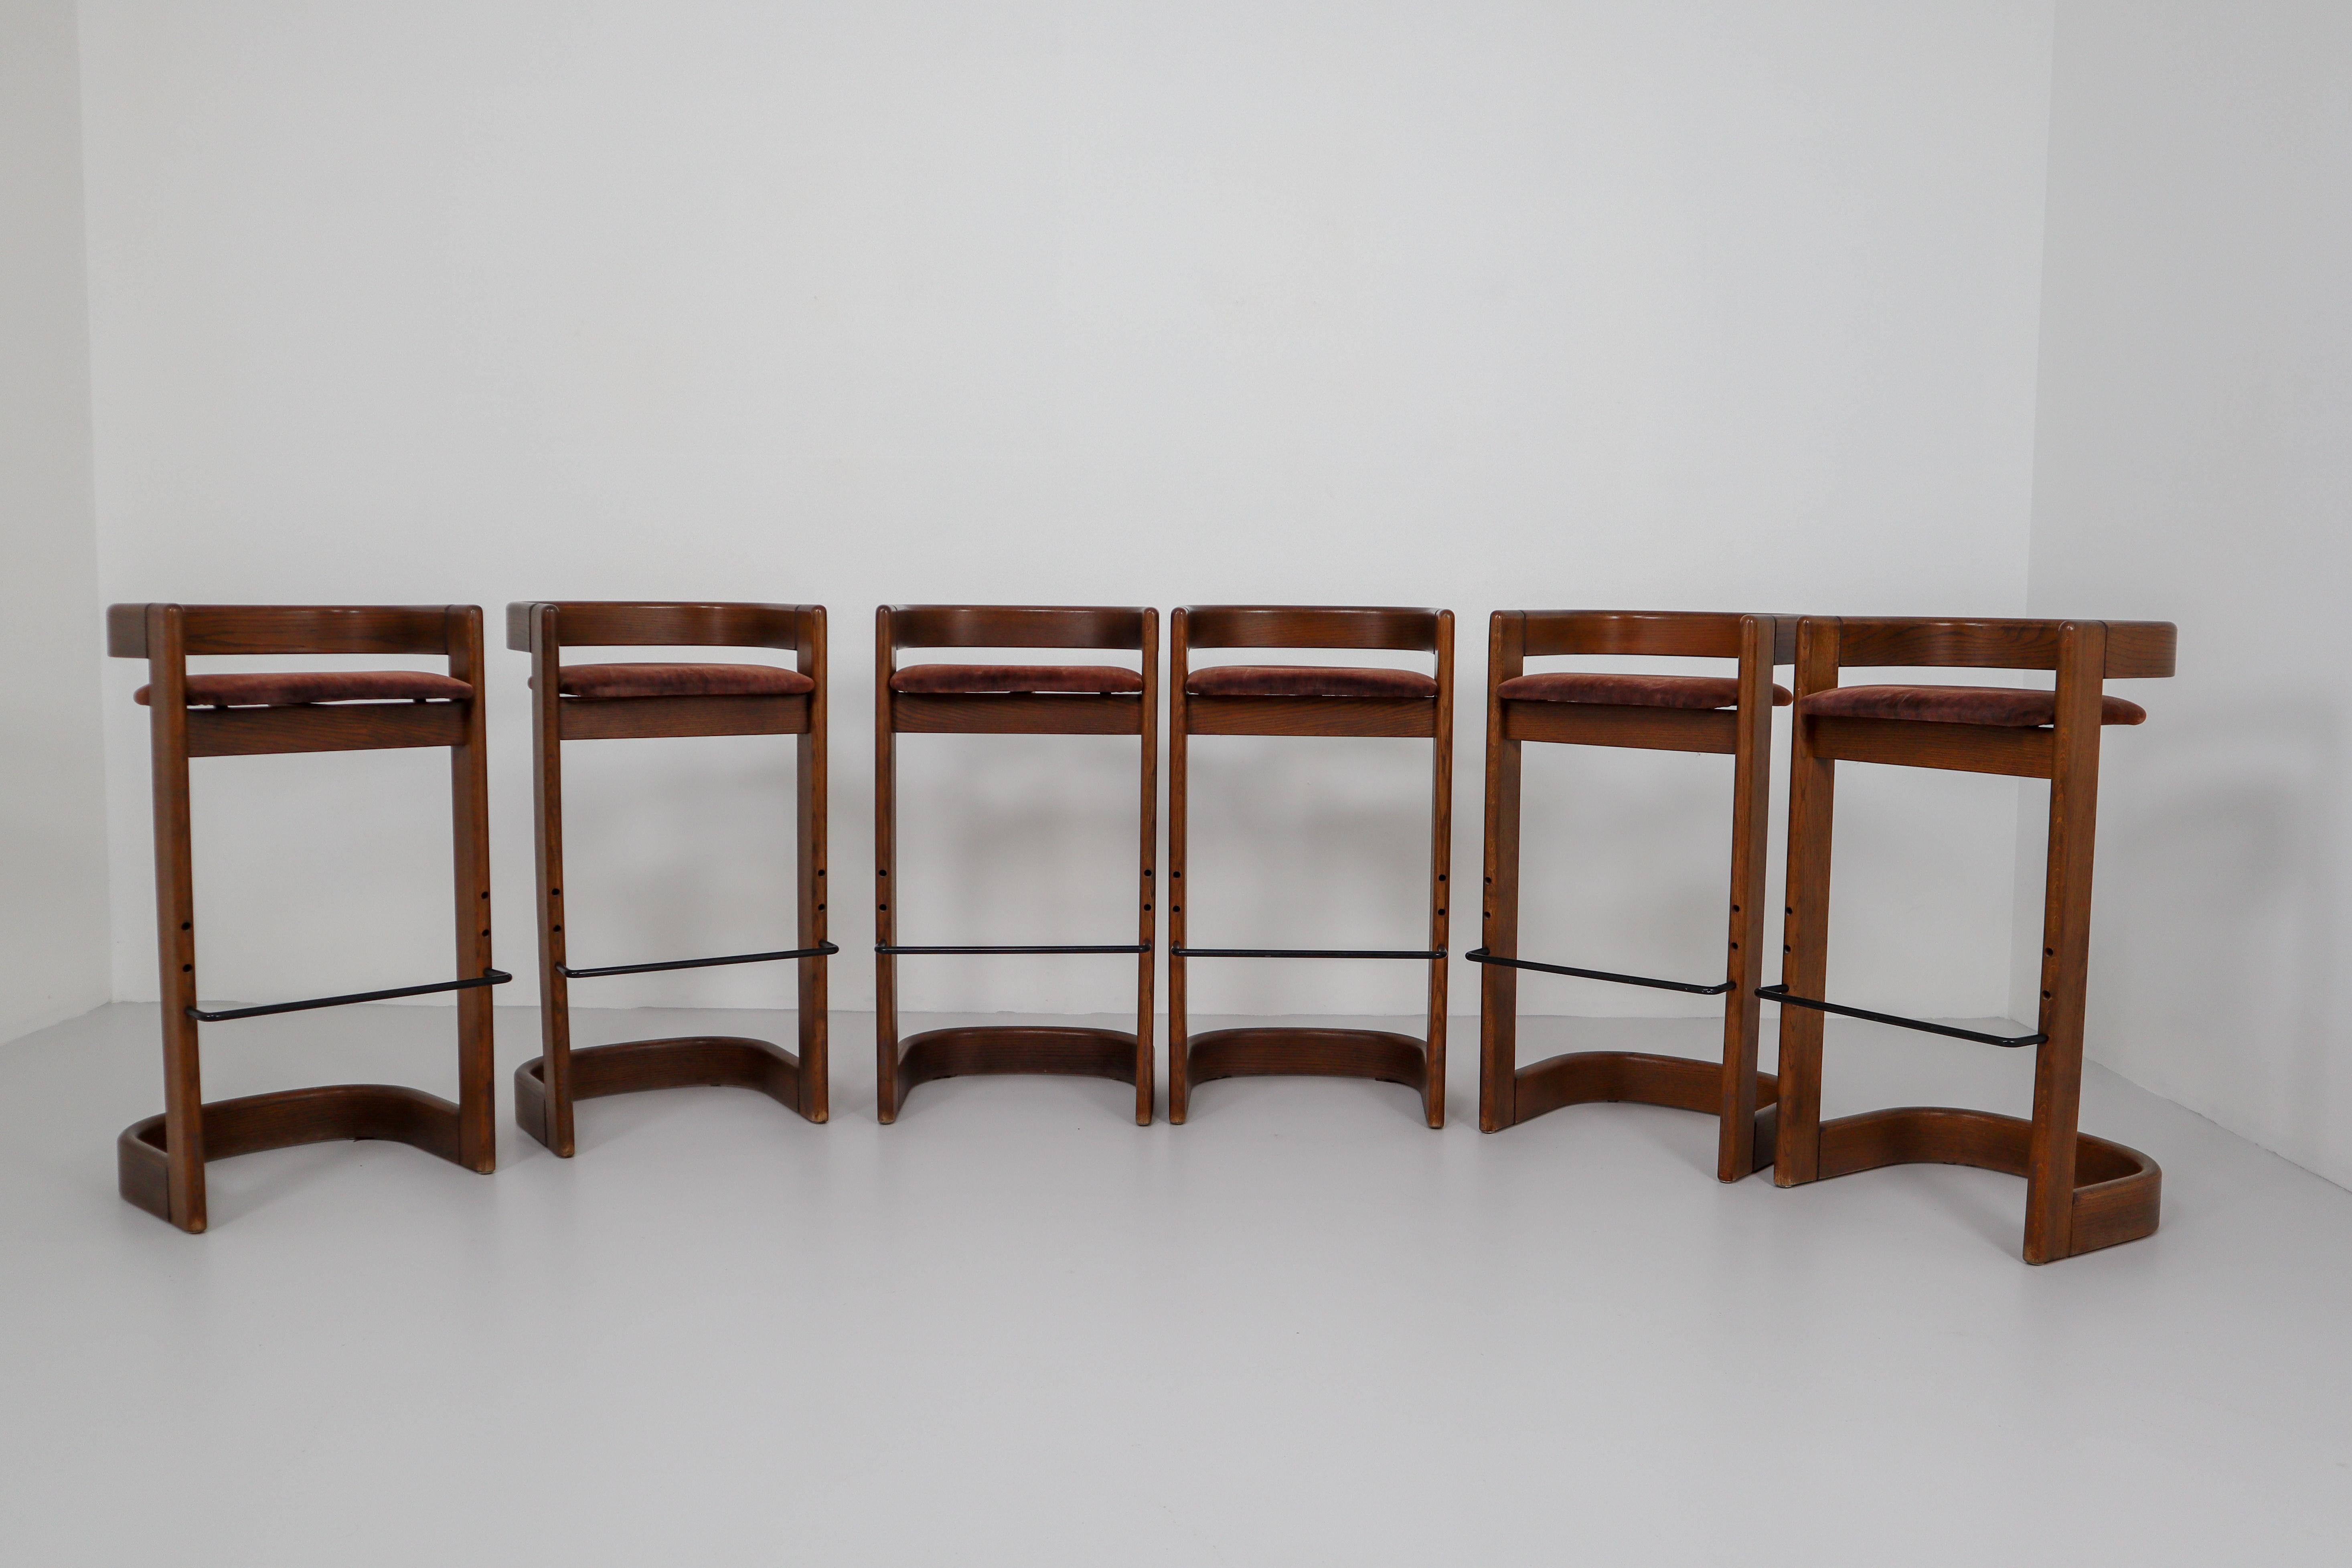 Vintage Mid-Century Modern oak bentwood bar stools in original brown fabric, Belgium, 1970s.
      